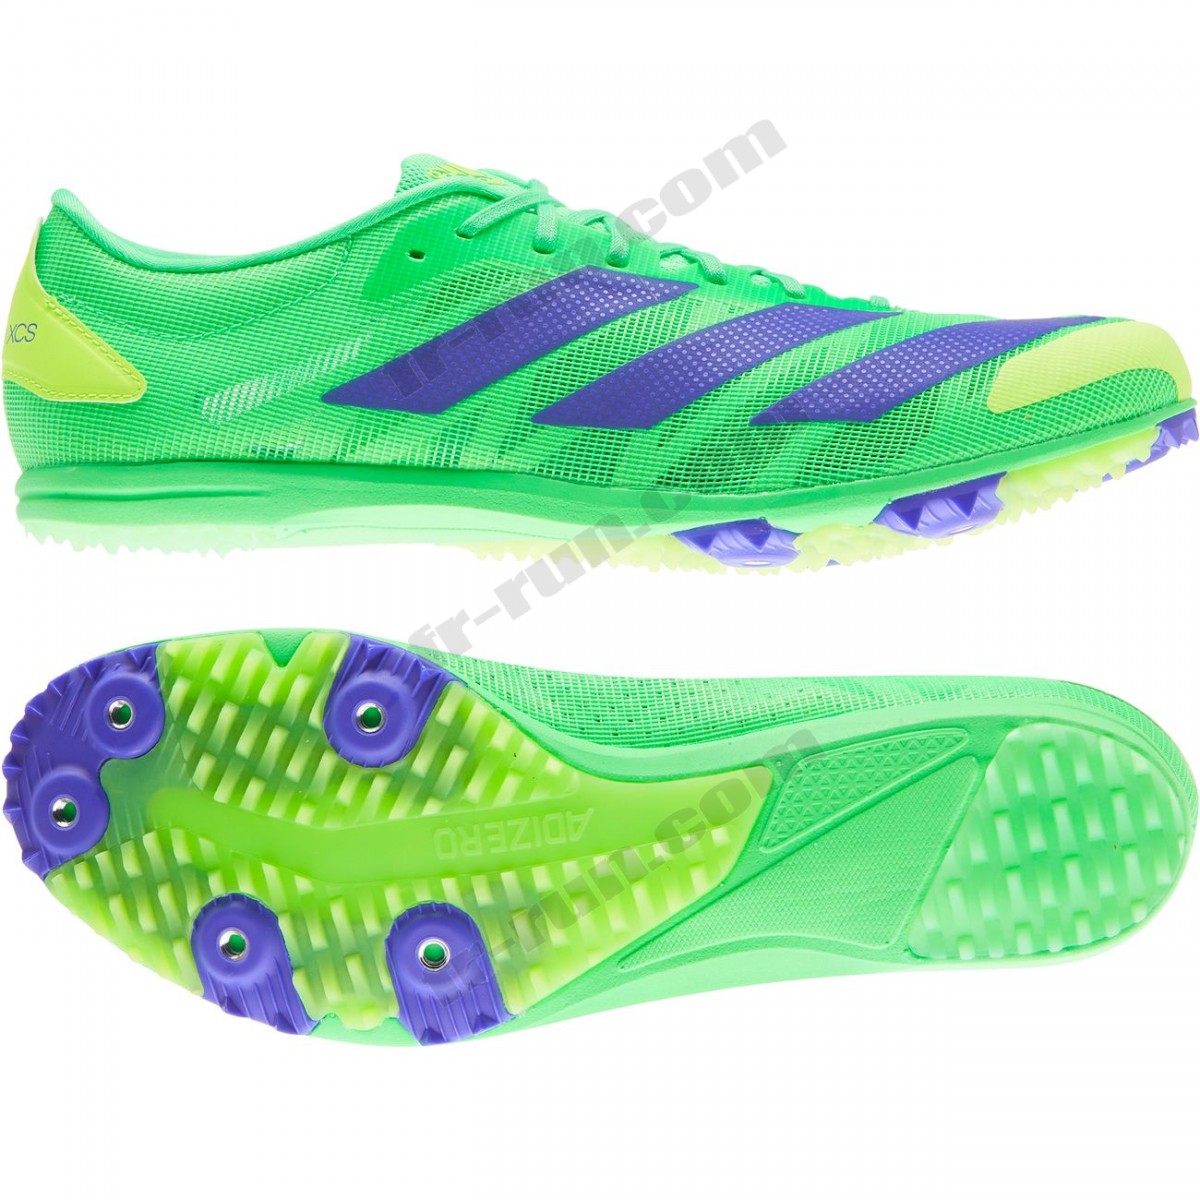 Adidas/Athlétisme adulte ADIDAS Chaussures adidas Adizero XCS √ Nouveau style √ Soldes - -6